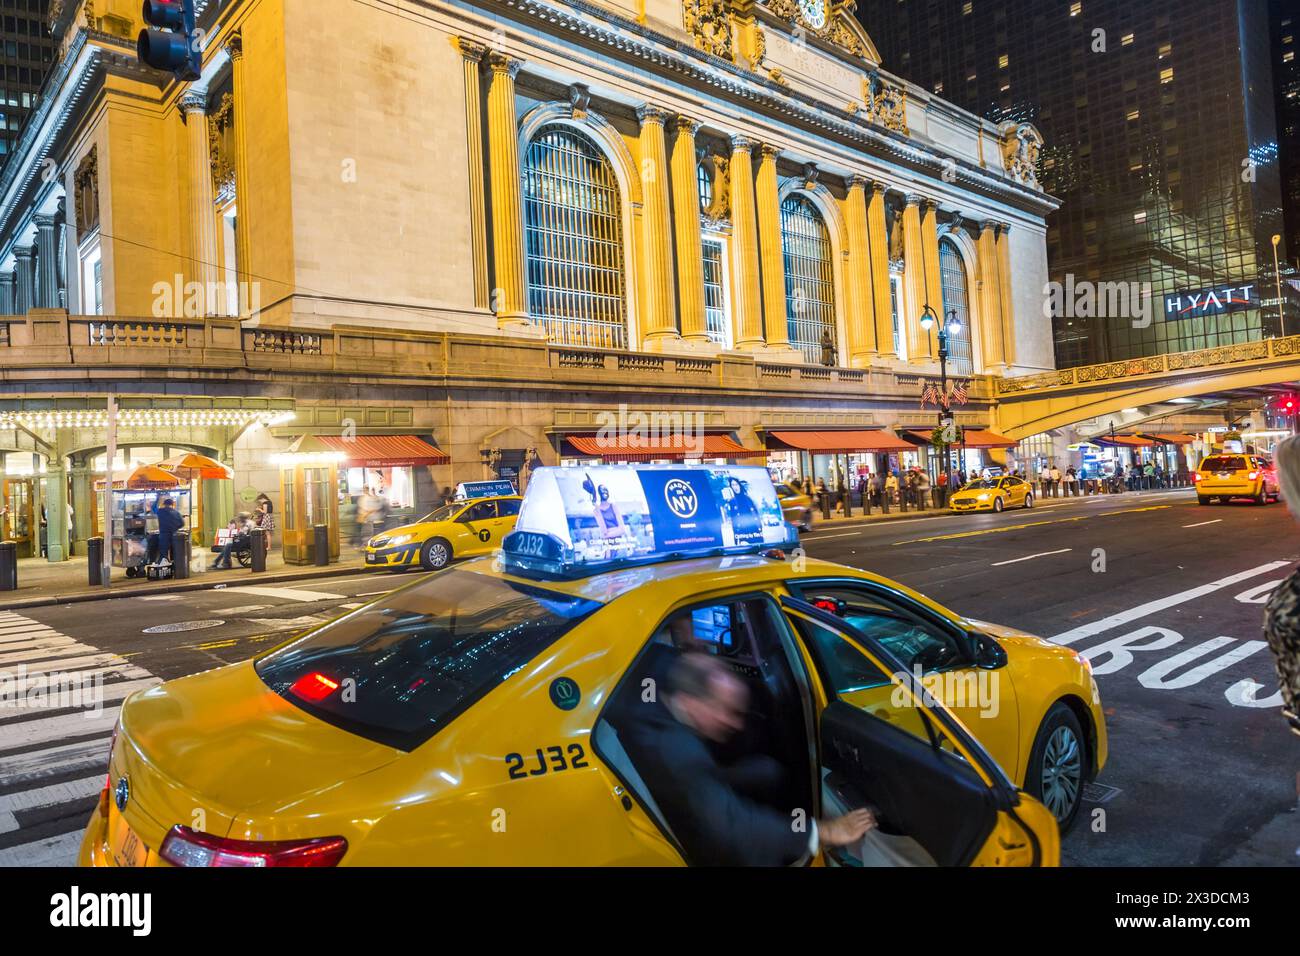 Taxi devant Grand Central Station, Central Manhattan, New York, États-Unis Banque D'Images